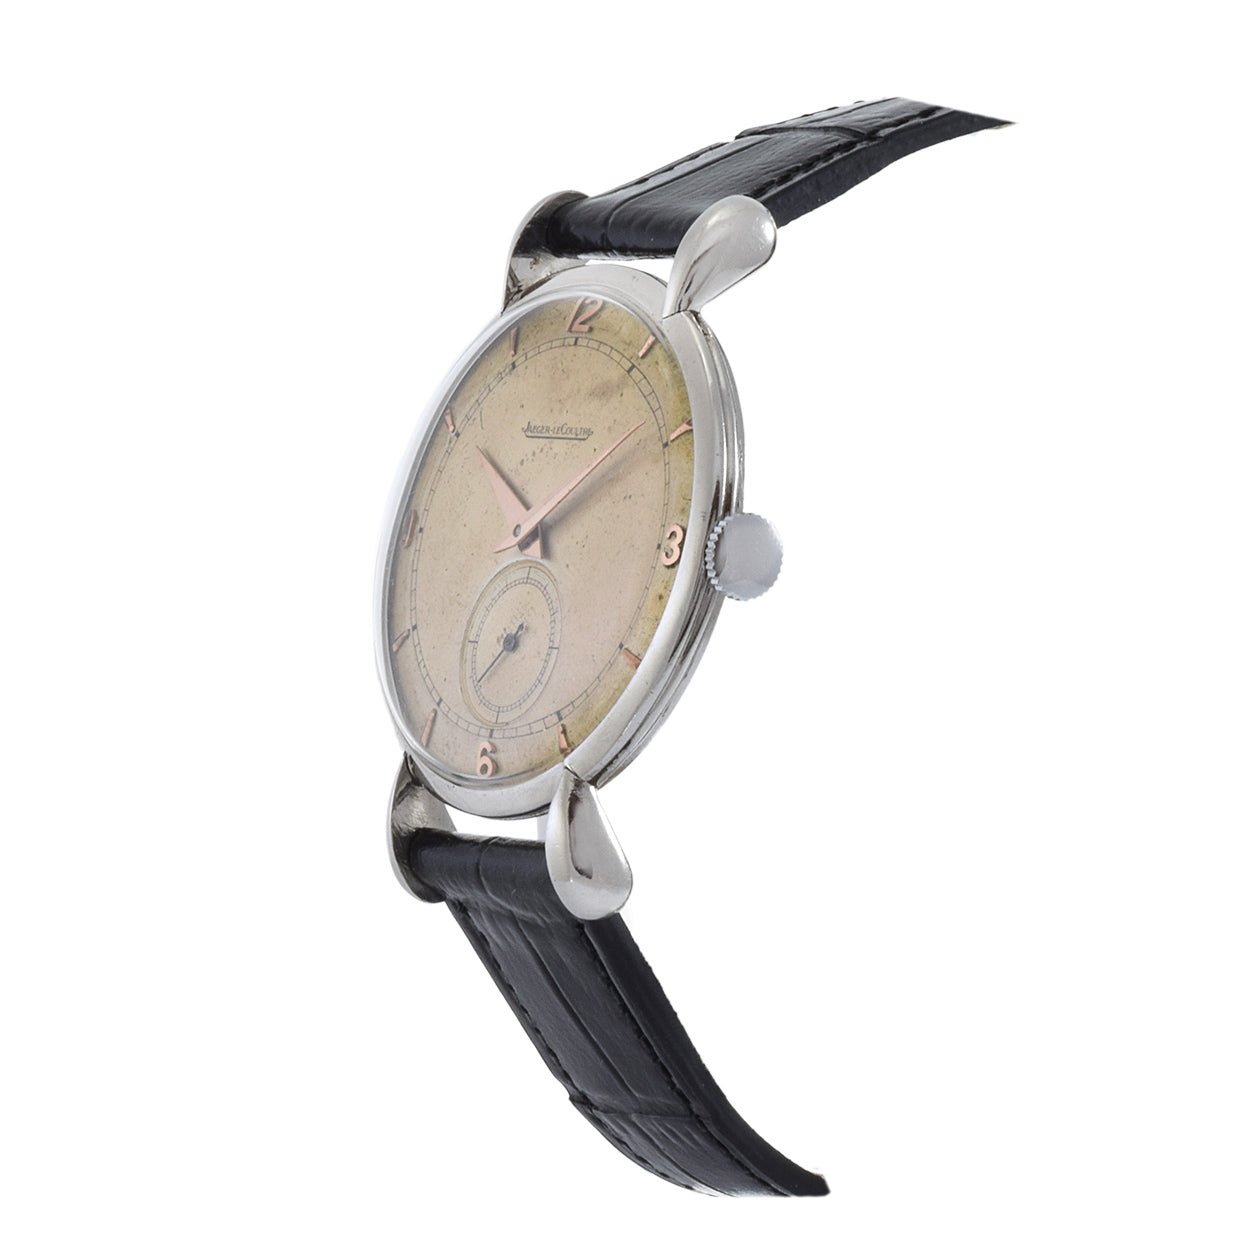 Vintage 1950's Jaeger-LeCoultre watch